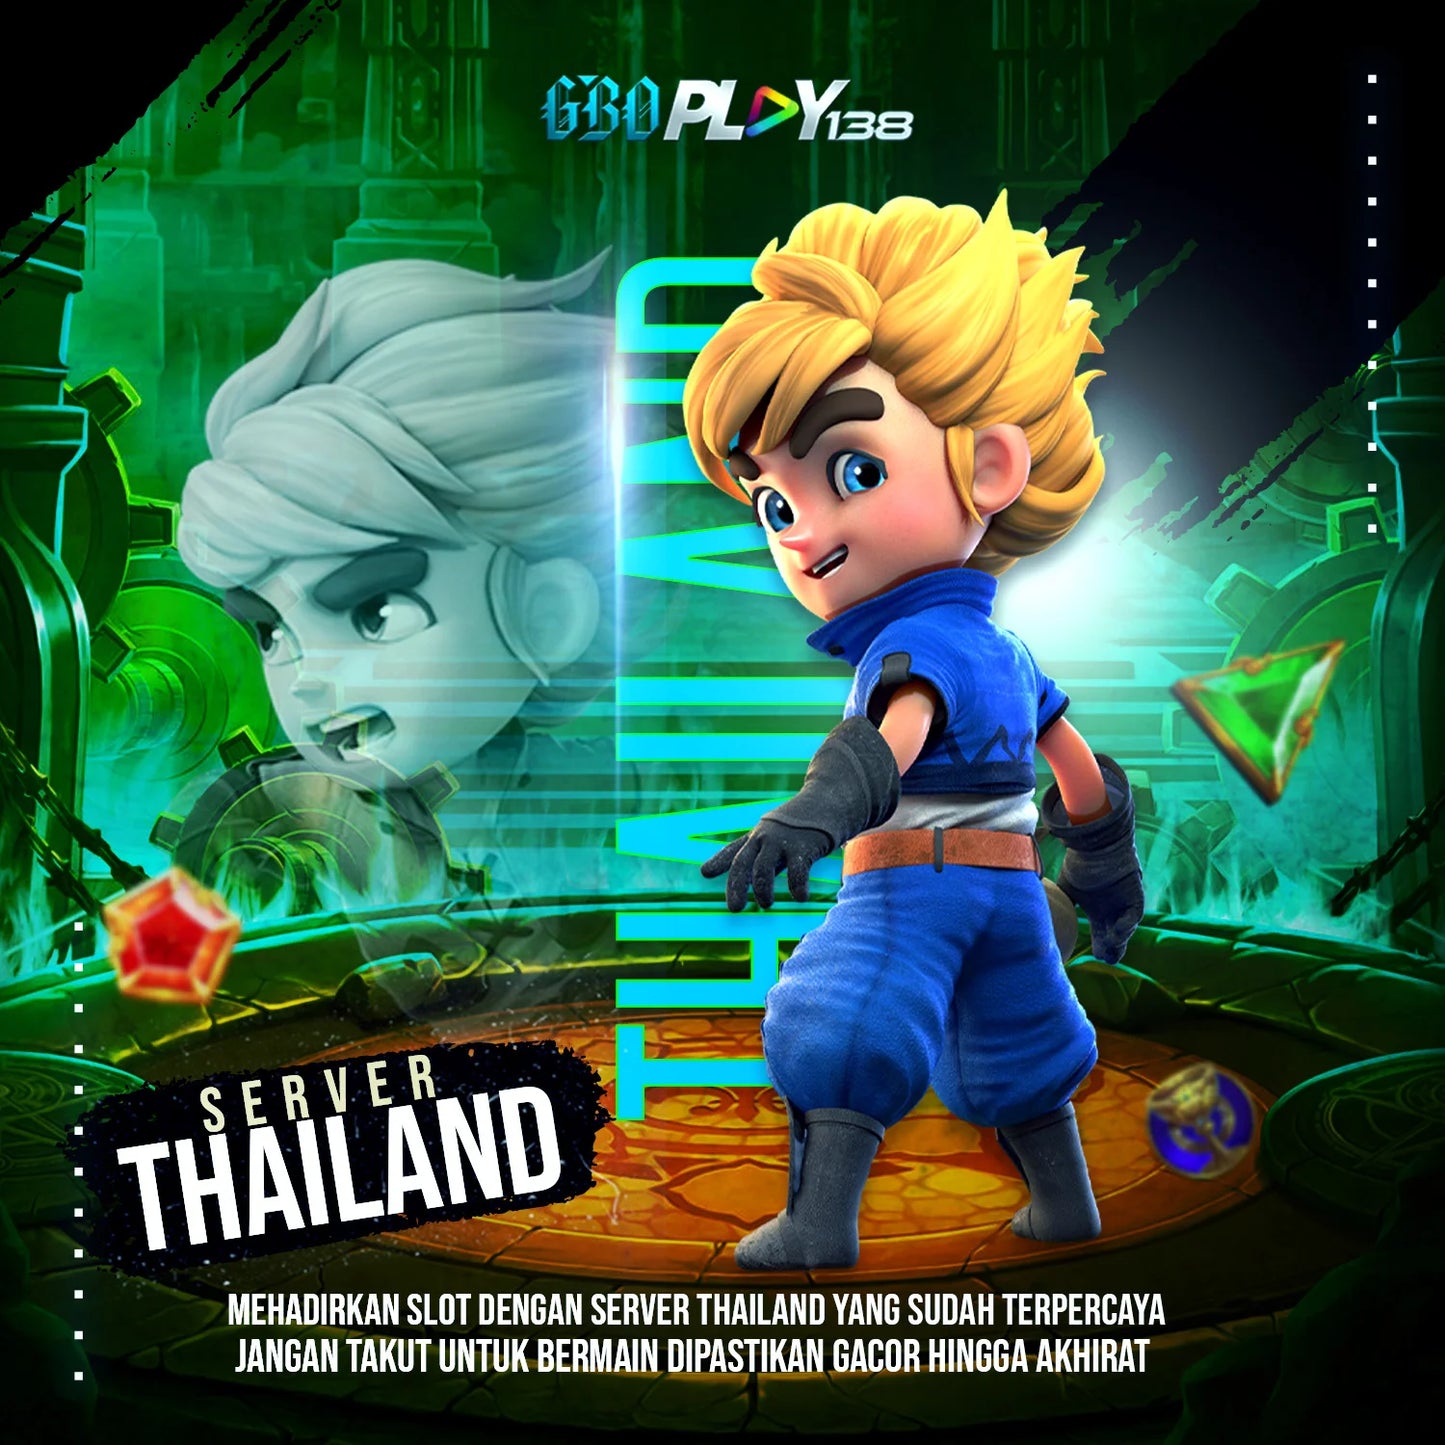 GBOPLAY138 : Situs Agen Slot Server Thailand Paling Gacor